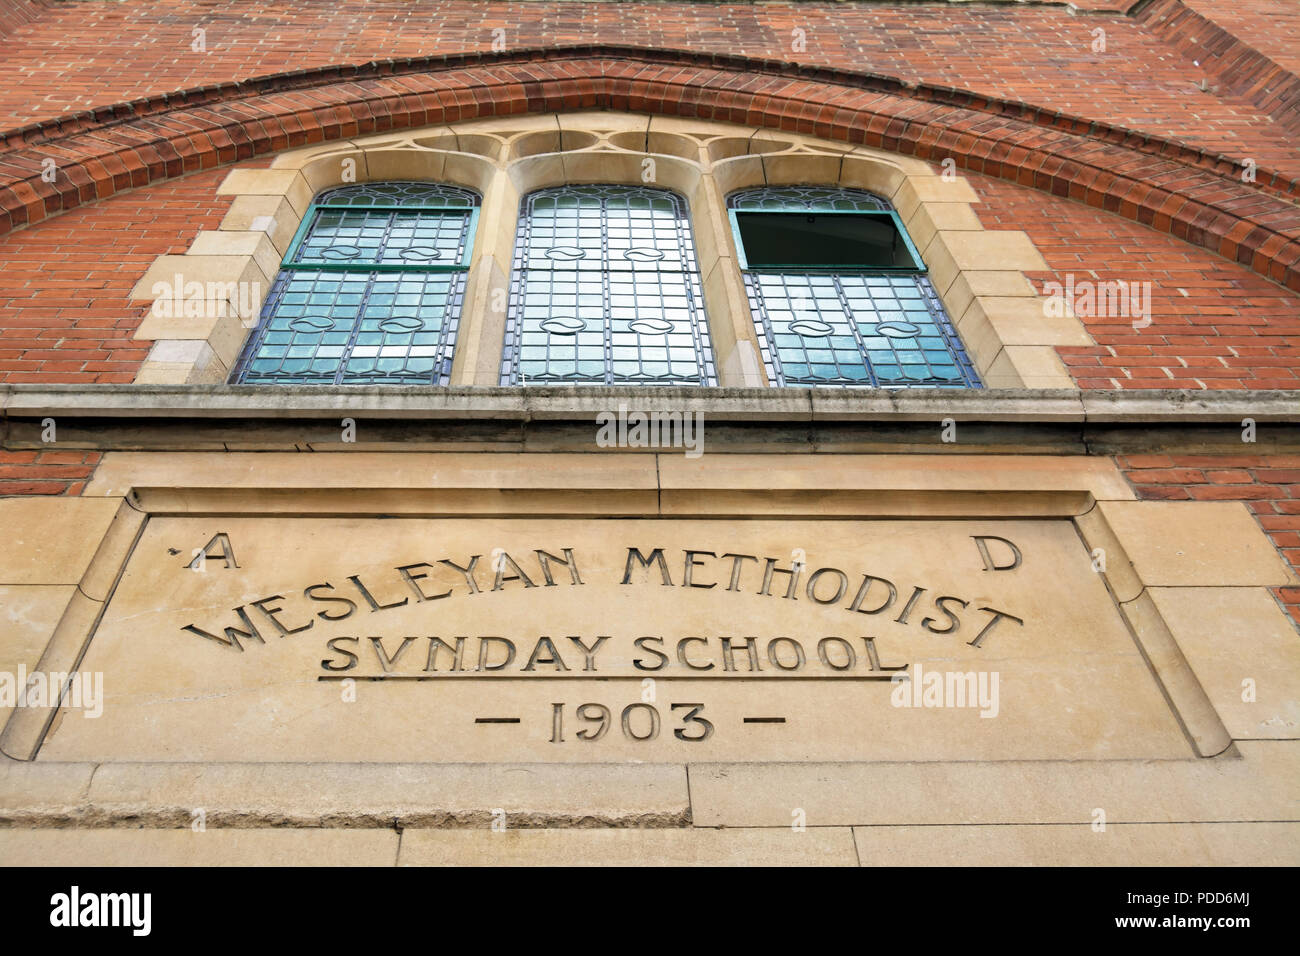 wall plaque marking the 1903 wesleyan methodist sunday school, chelsea, london, england Stock Photo